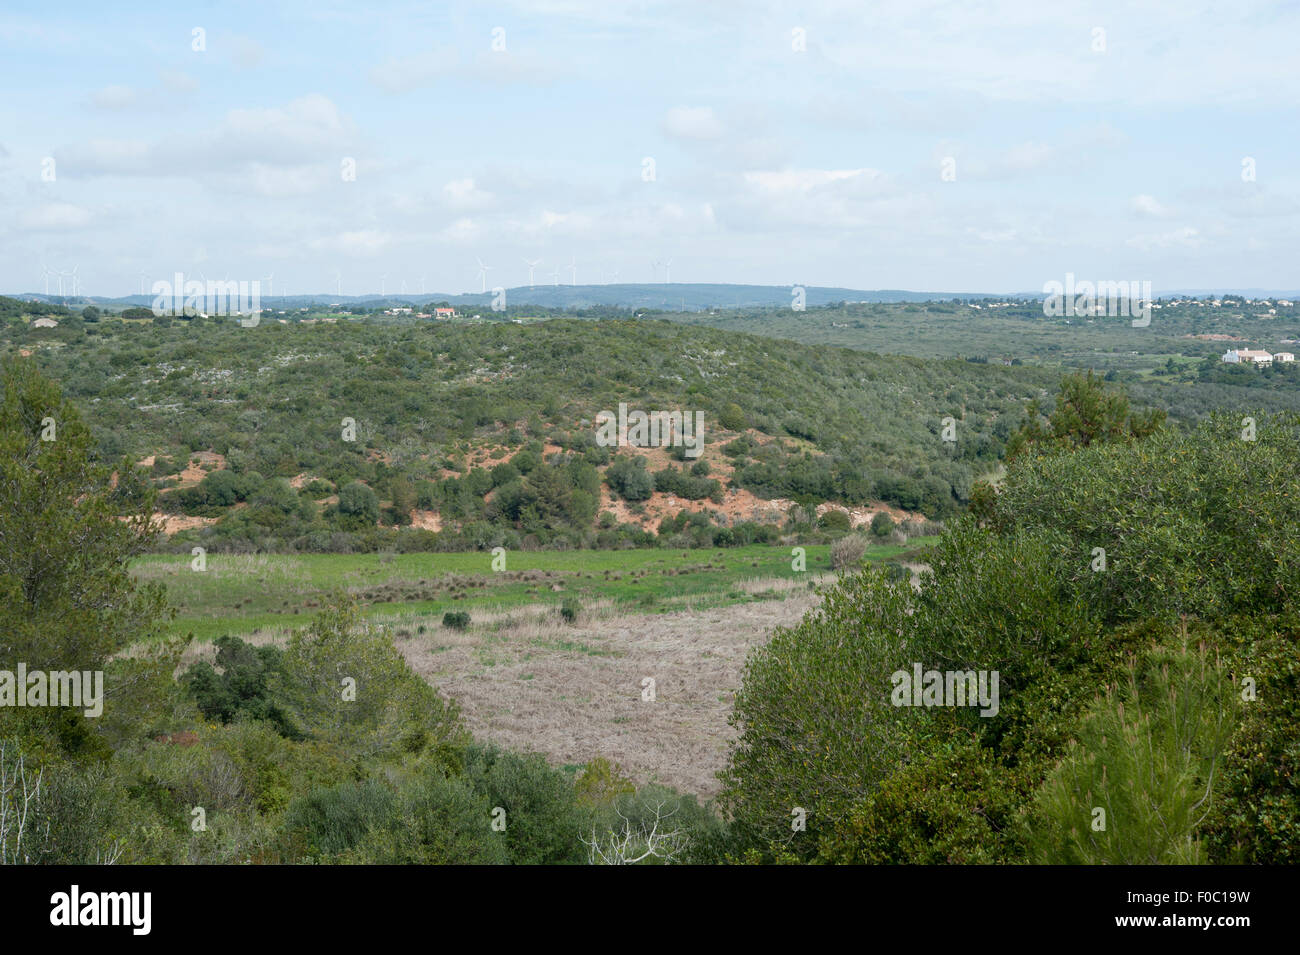 View of the coastal vegetation Near Burgau, Western Portugal. Stock Photo